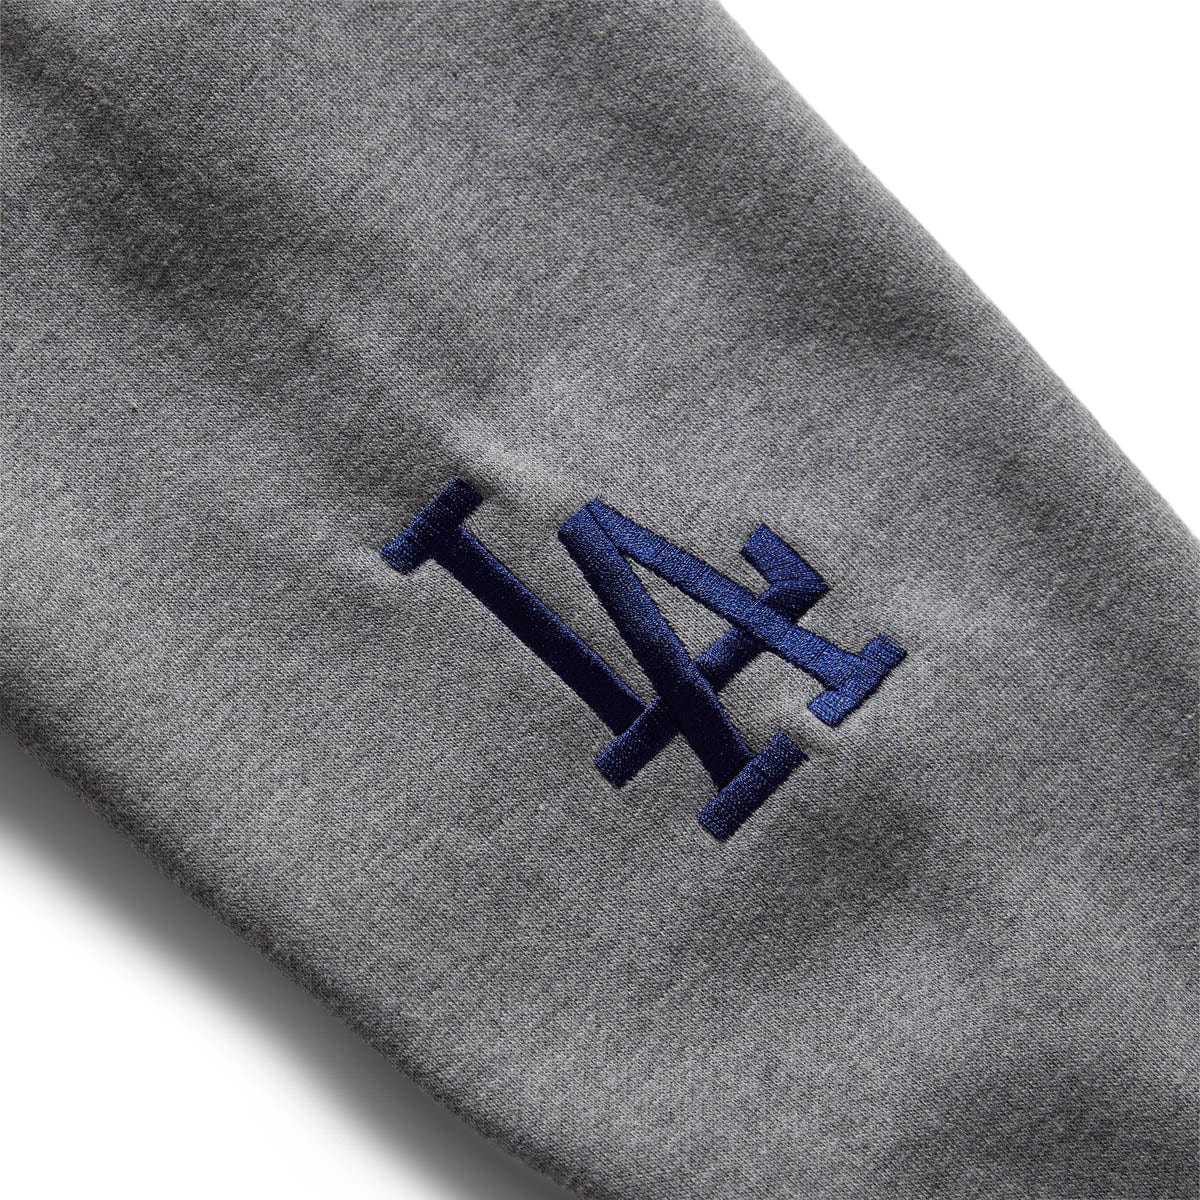 New Era Los Angeles Dodgers Zip Up Jacket XL